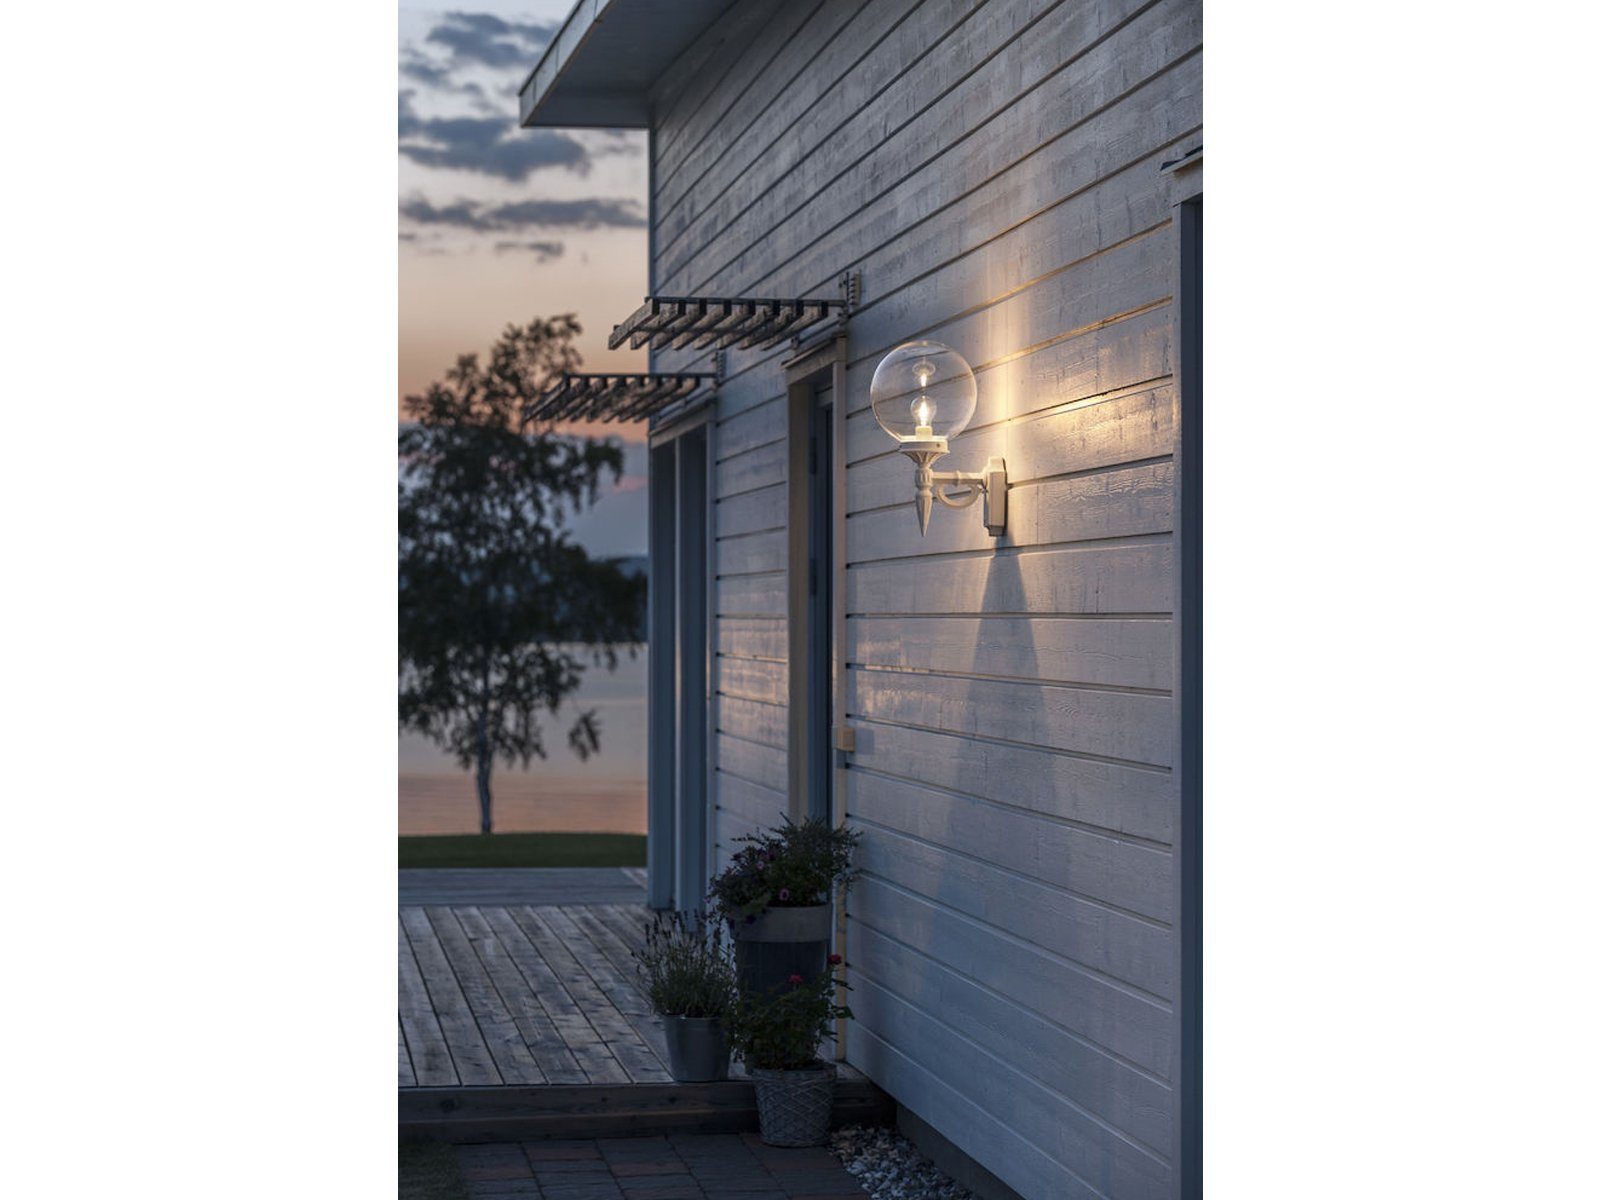 44cm H: Haus-wand Wand-laterne, LED warmweiß, Fassadenbeleuchtung wechselbar, meineWunschleuchte Weiß, Außen-Wandleuchte, Dimmfunktion, beleuchten, LED